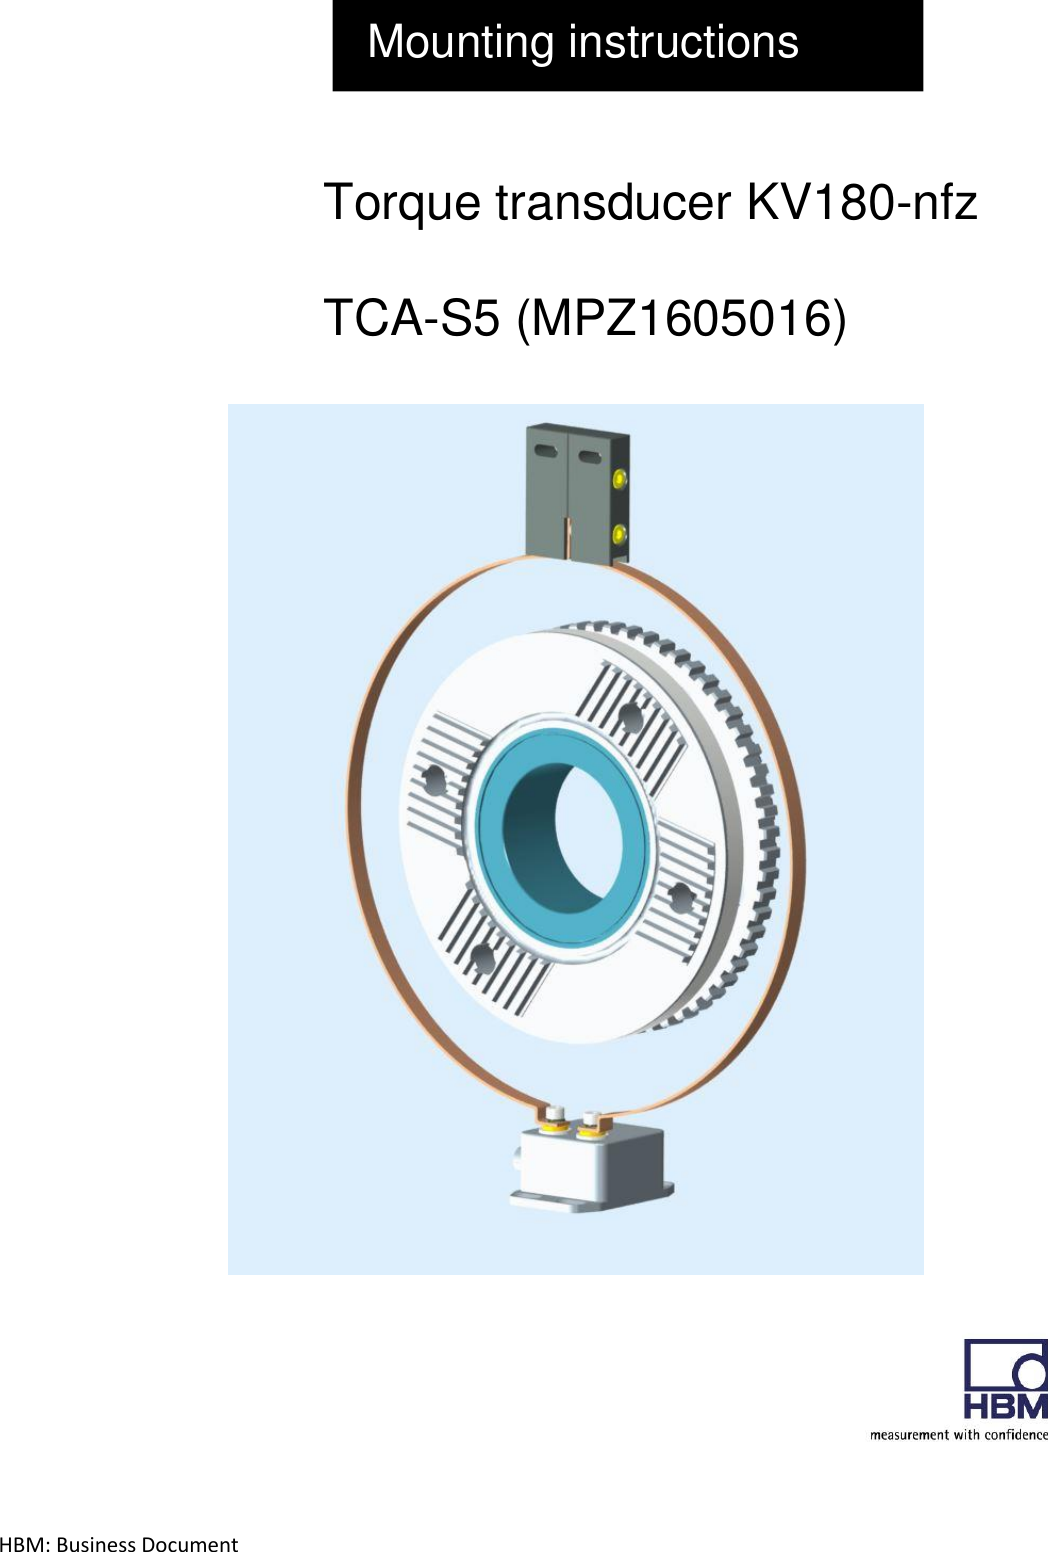 HBM: Business Document             Mounting instructions Torque transducer KV180-nfz  TCA-S5 (MPZ1605016)                                      